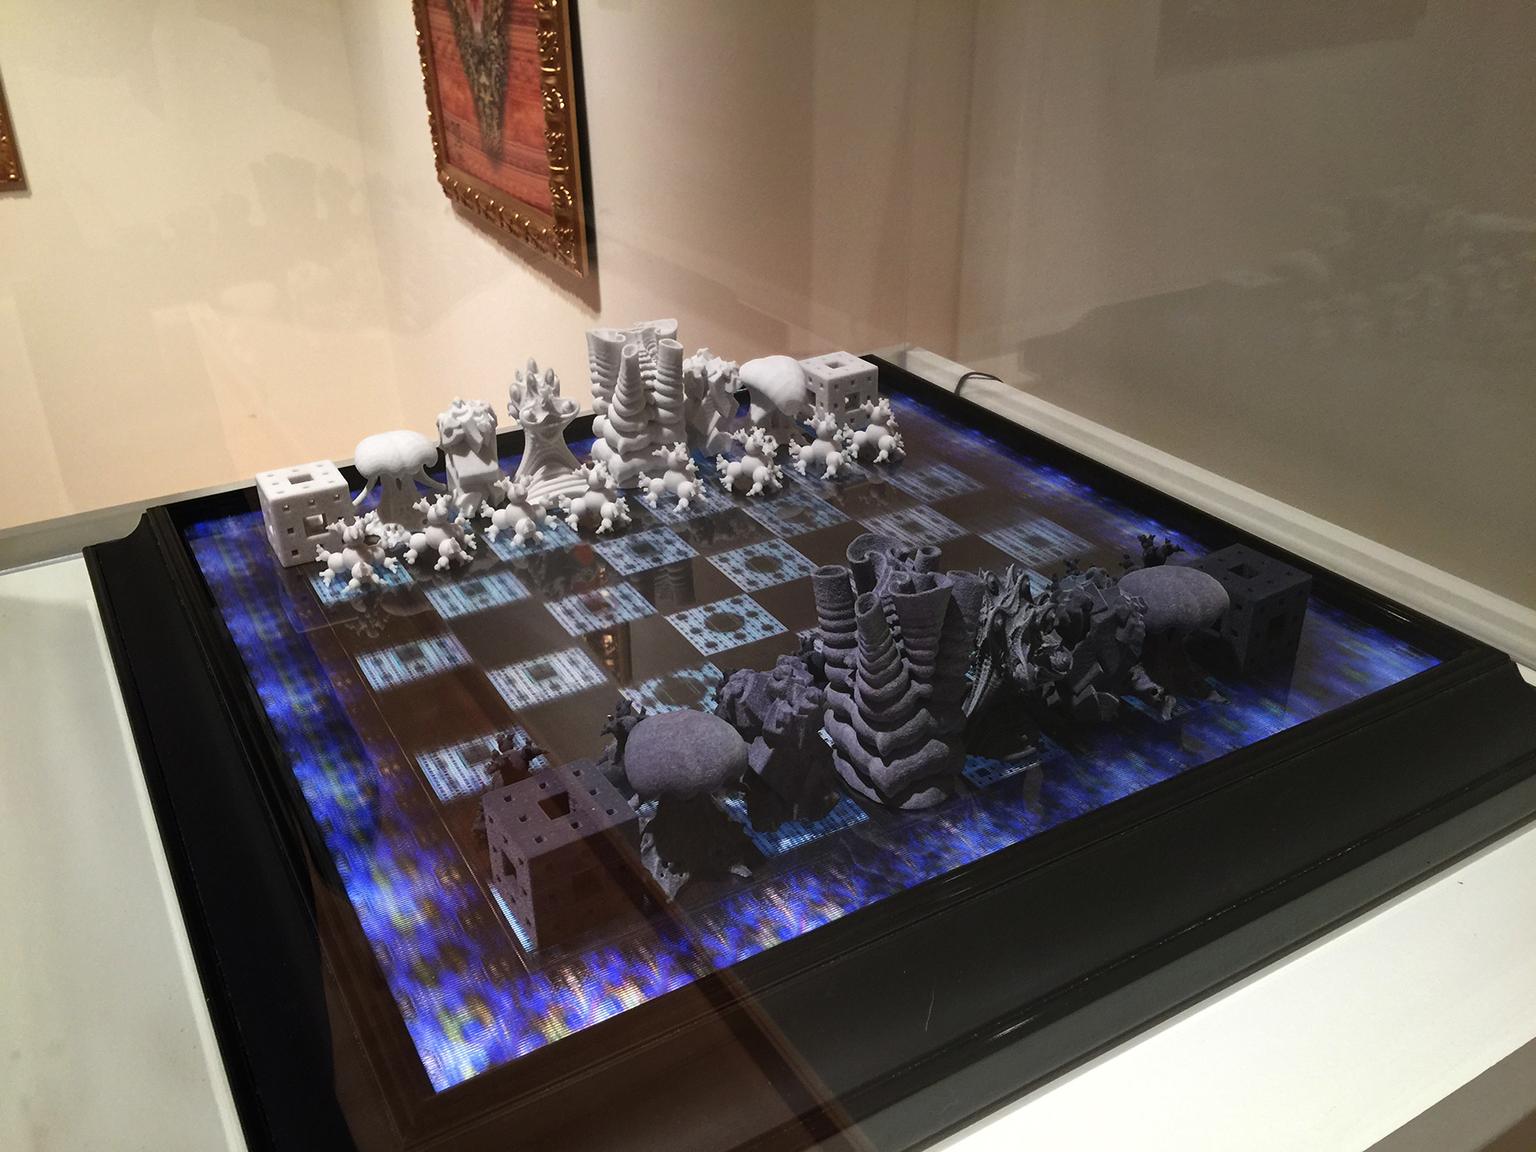 Image for entry '3 Dimensional Fractal Chess Set with Menger SPonge based Lenticular Board'